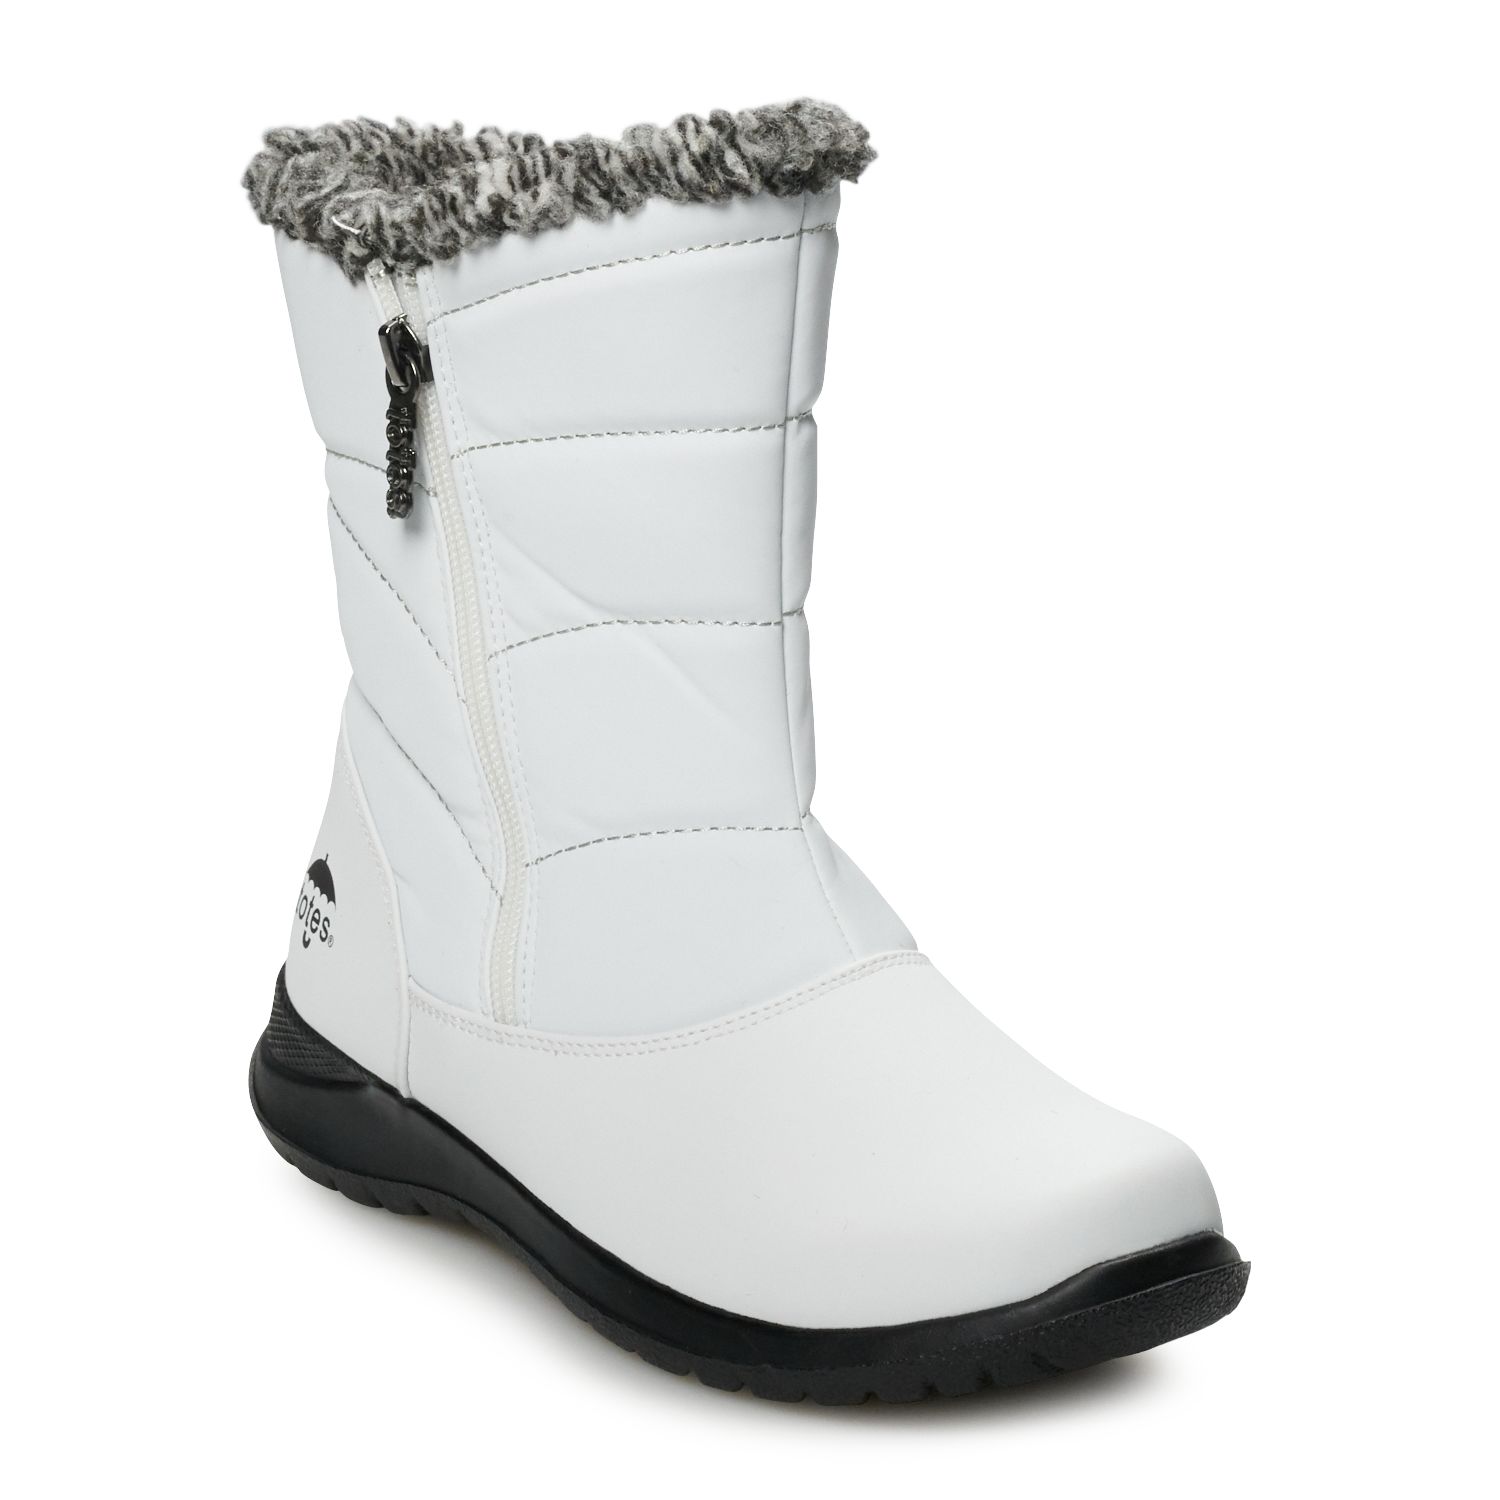 waterproof insulated boots women's